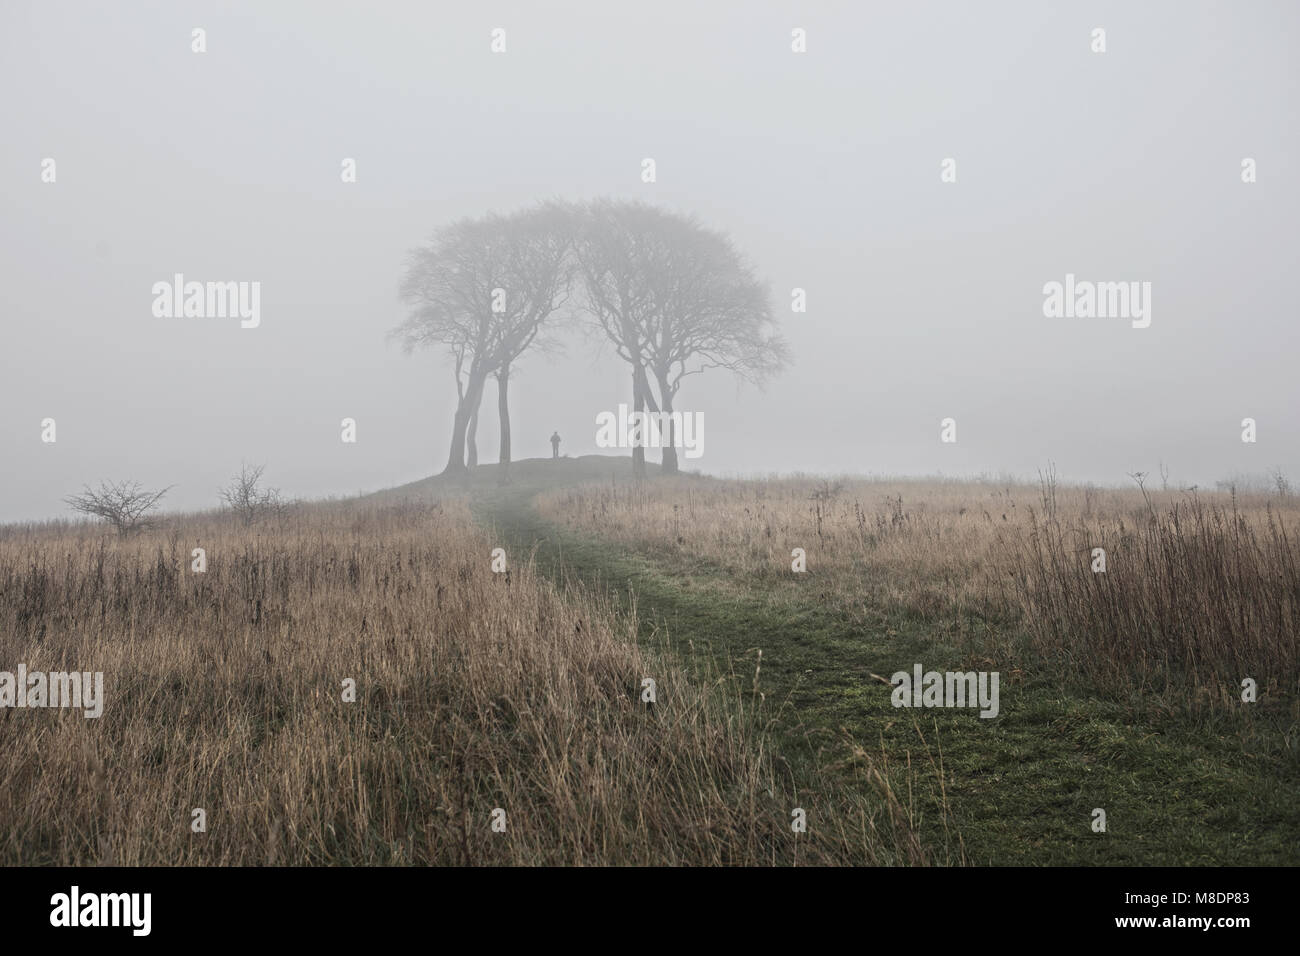 Rural scene with trees in mist, Houghton-le-Spring, Sunderland, UK Stock Photo